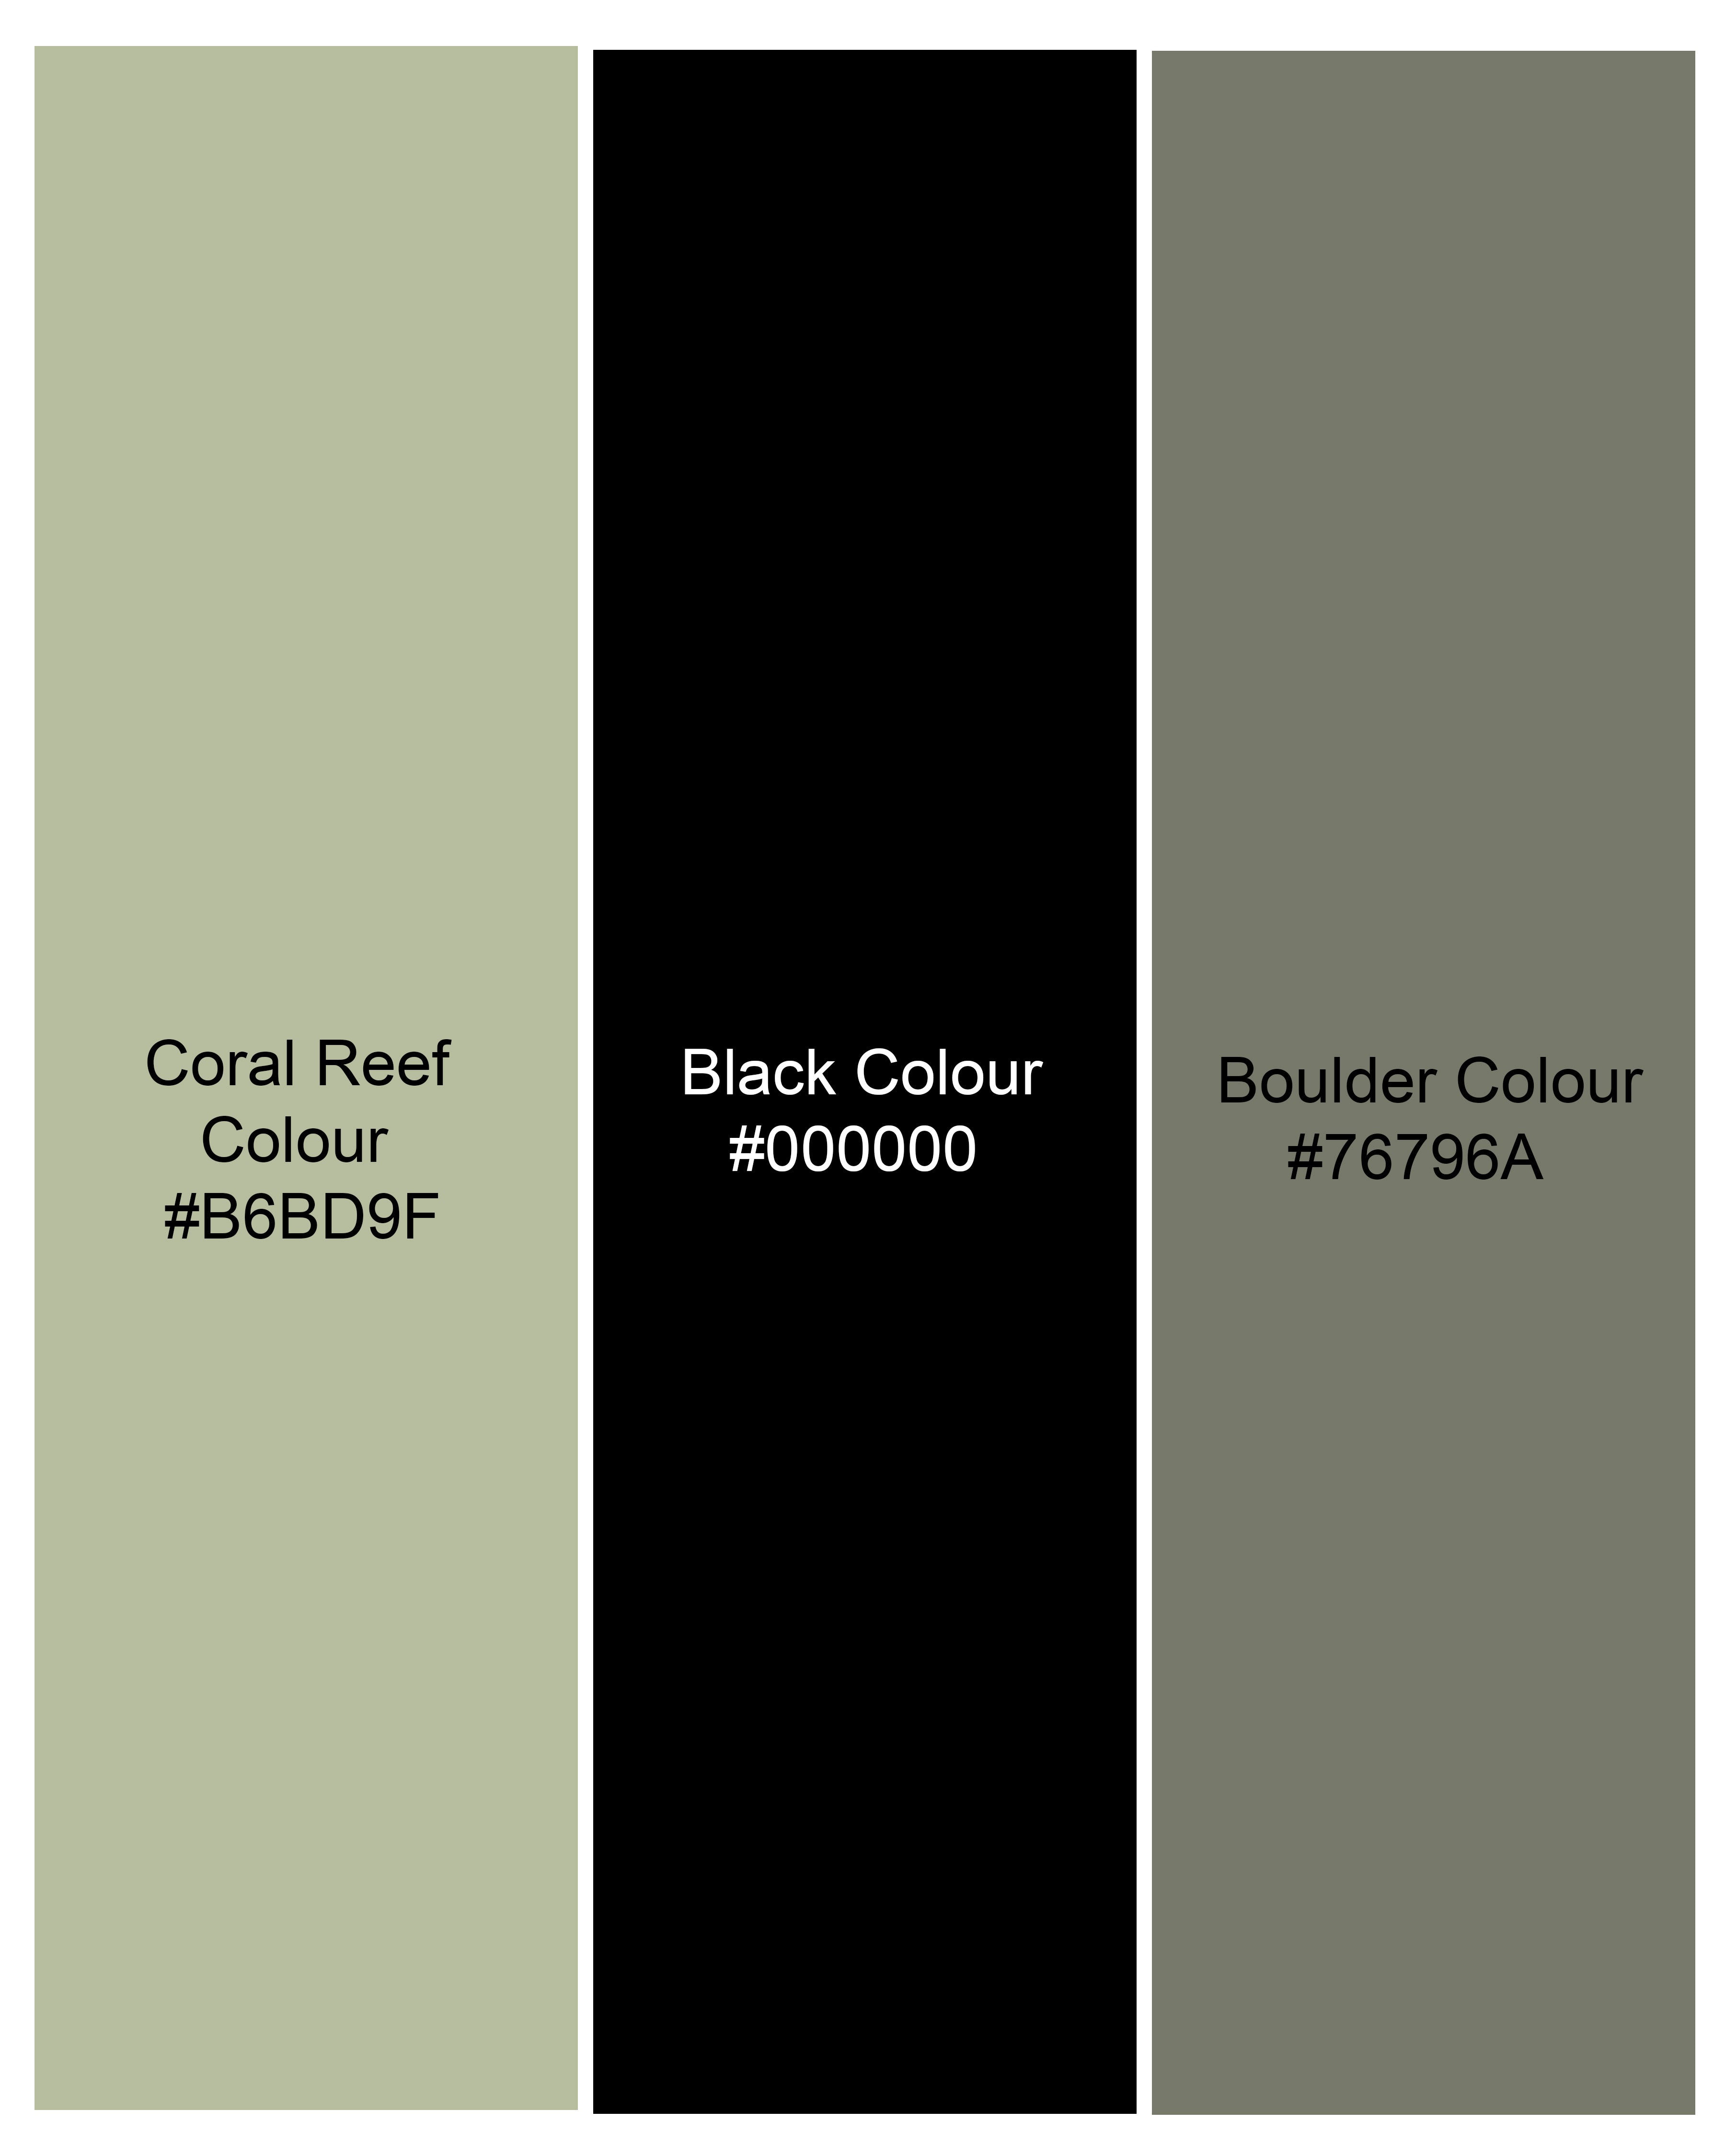 Coral Reef Green Leaves Printed Luxurious Linen Shirt 8425-BLE-38, 8425-BLE-H-38, 8425-BLE-39,8425-BLE-H-39, 8425-BLE-40, 8425-BLE-H-40, 8425-BLE-42, 8425-BLE-H-42, 8425-BLE-44, 8425-BLE-H-44, 8425-BLE-46, 8425-BLE-H-46, 8425-BLE-48, 8425-BLE-H-48, 8425-BLE-50, 8425-BLE-H-50, 8425-BLE-52, 8425-BLE-H-52